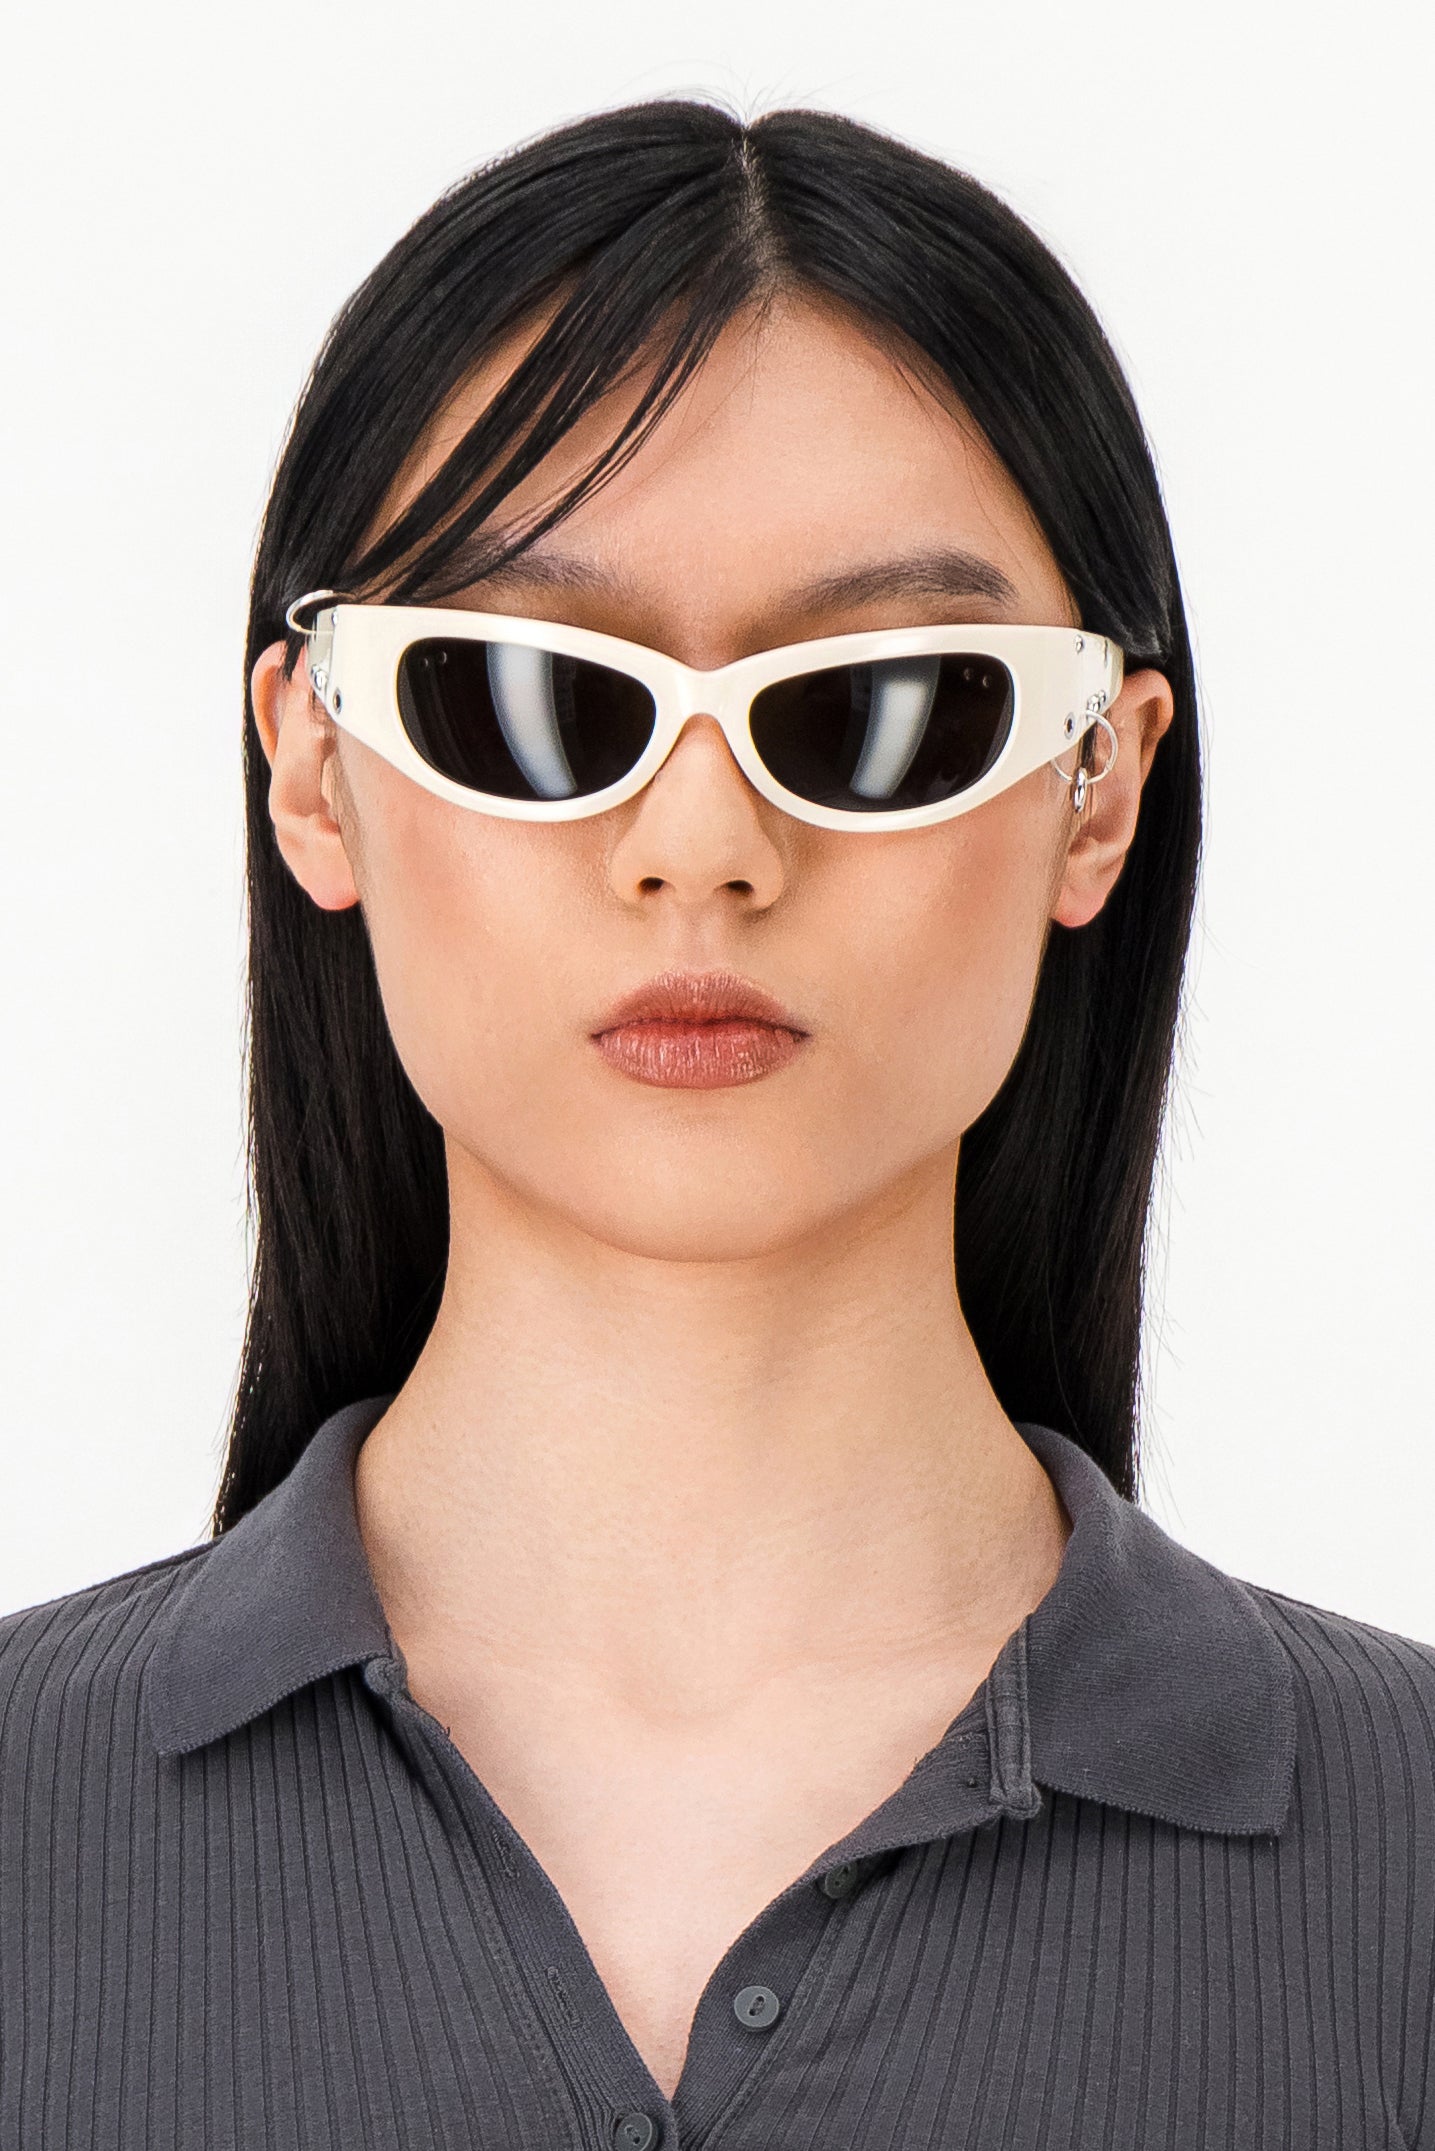 Clara beige sunglasses